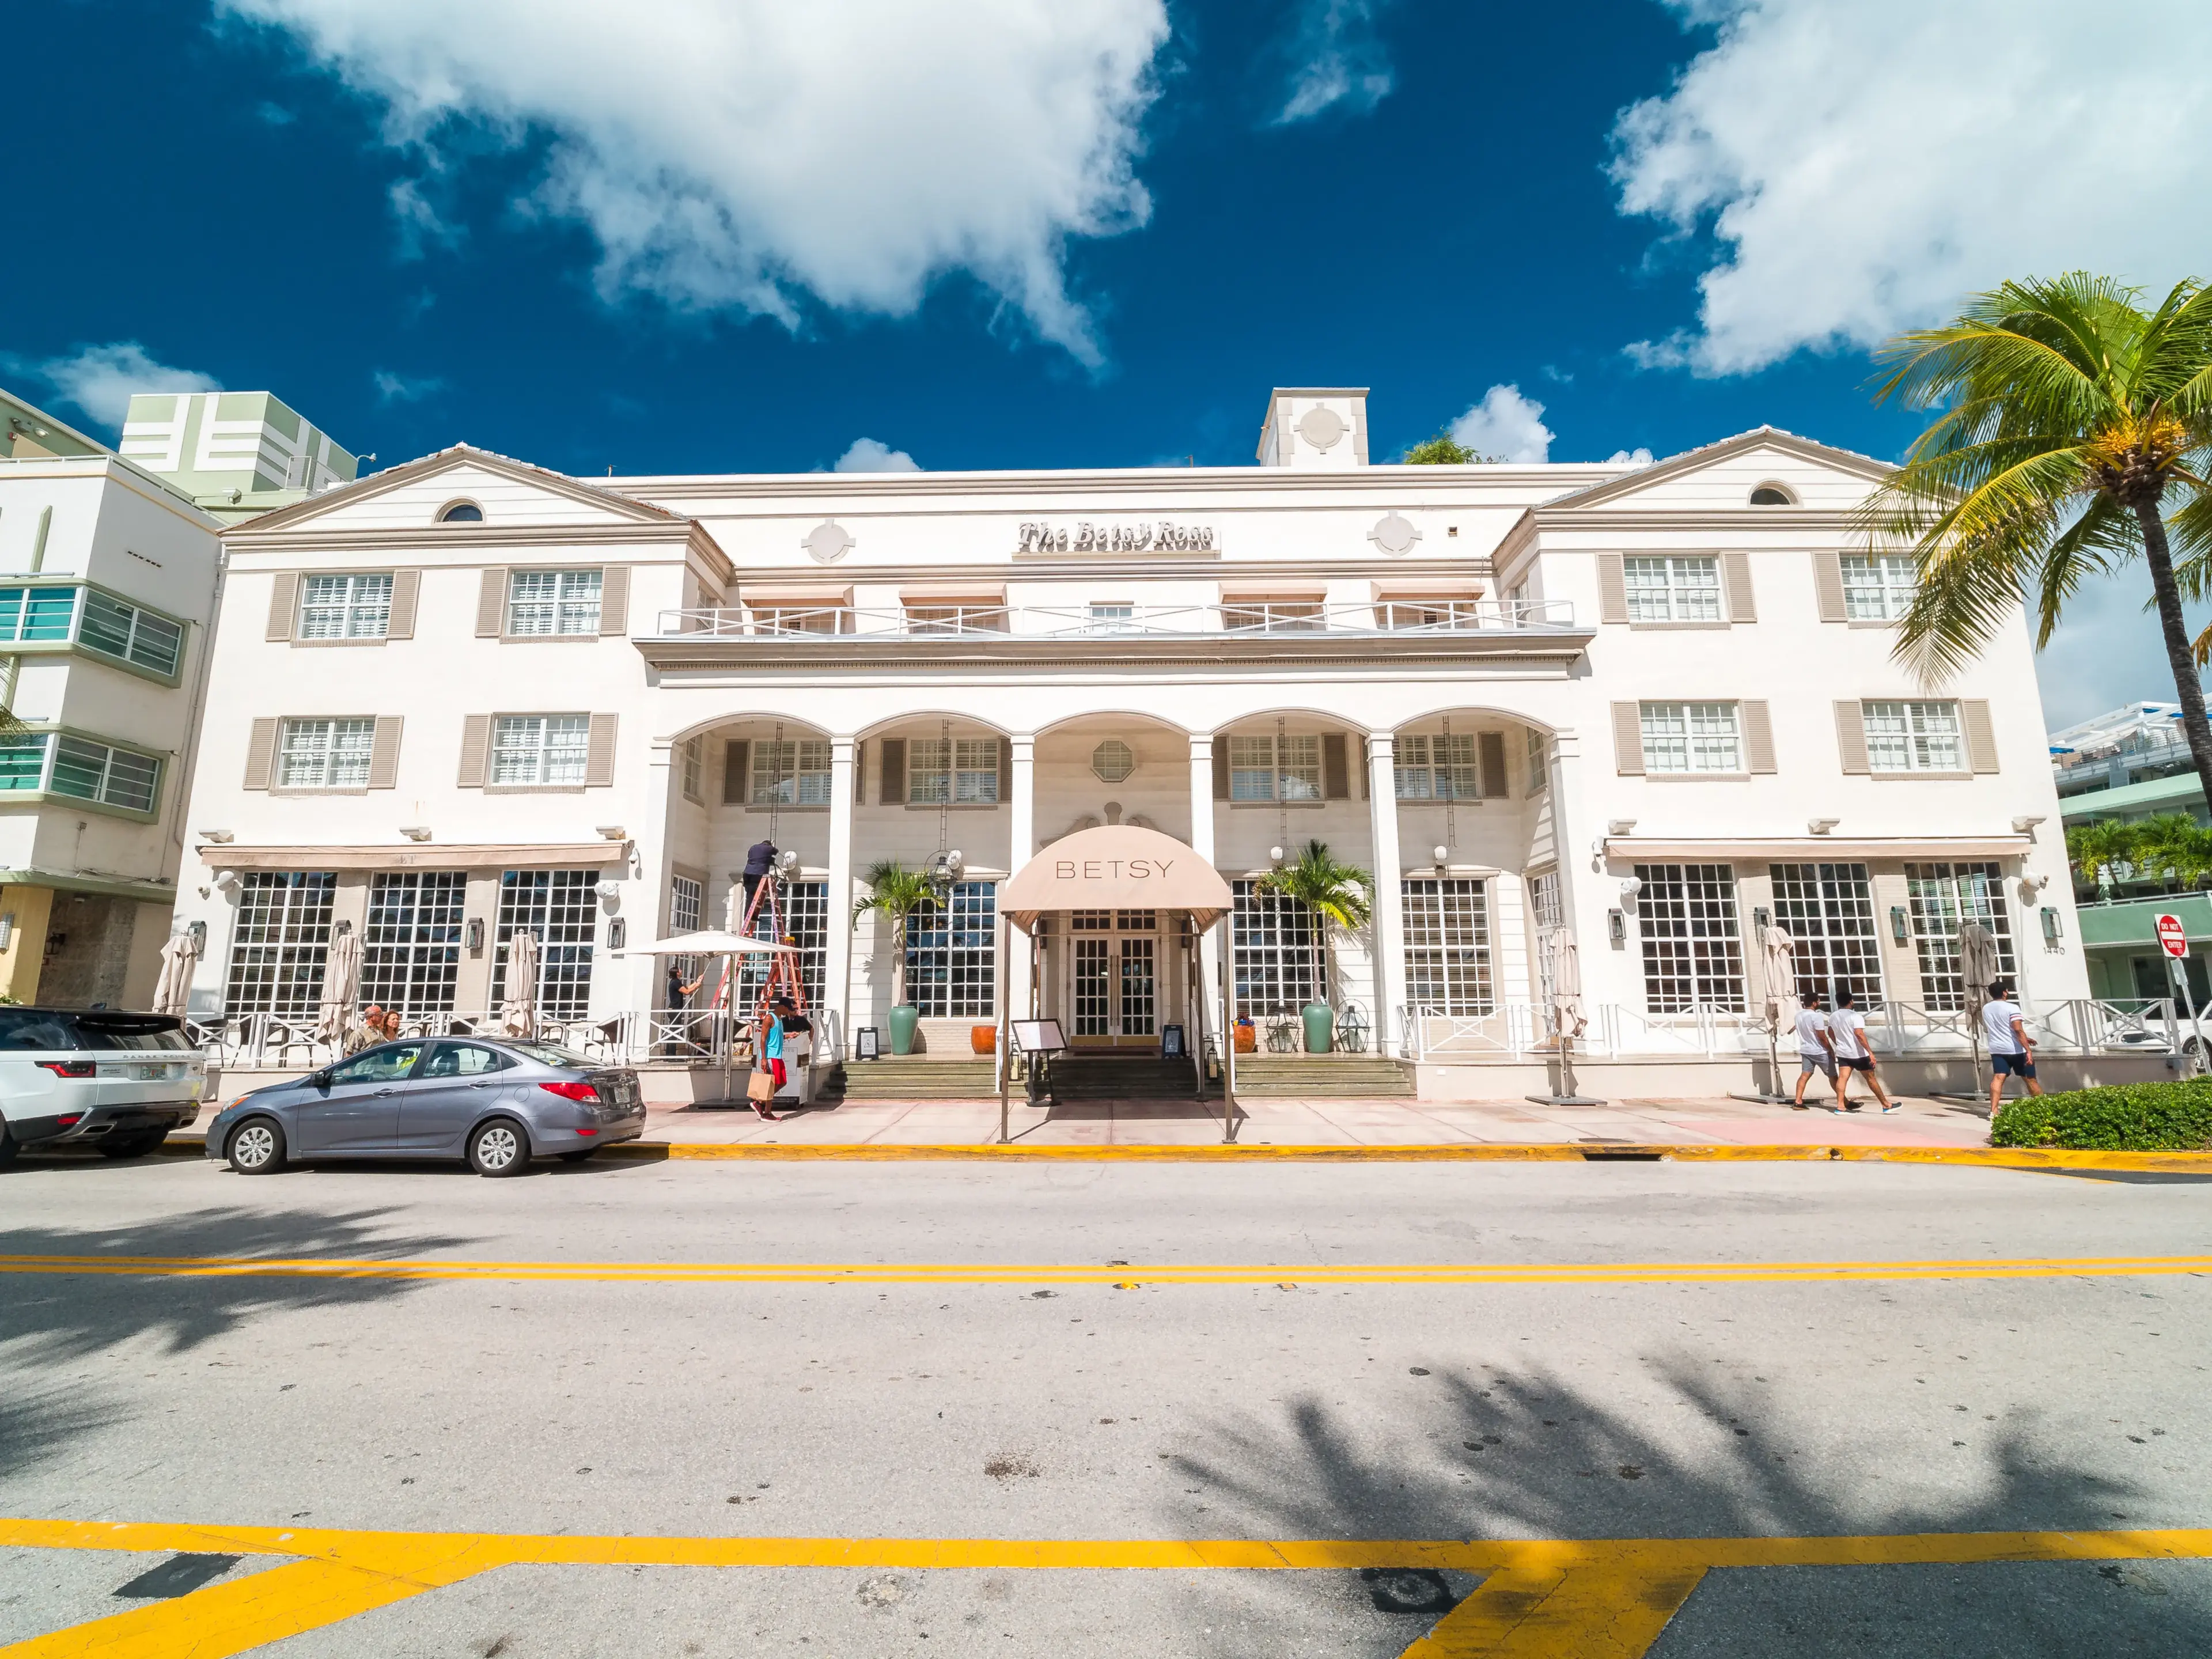 Cheap Hotels In Destin, Florida